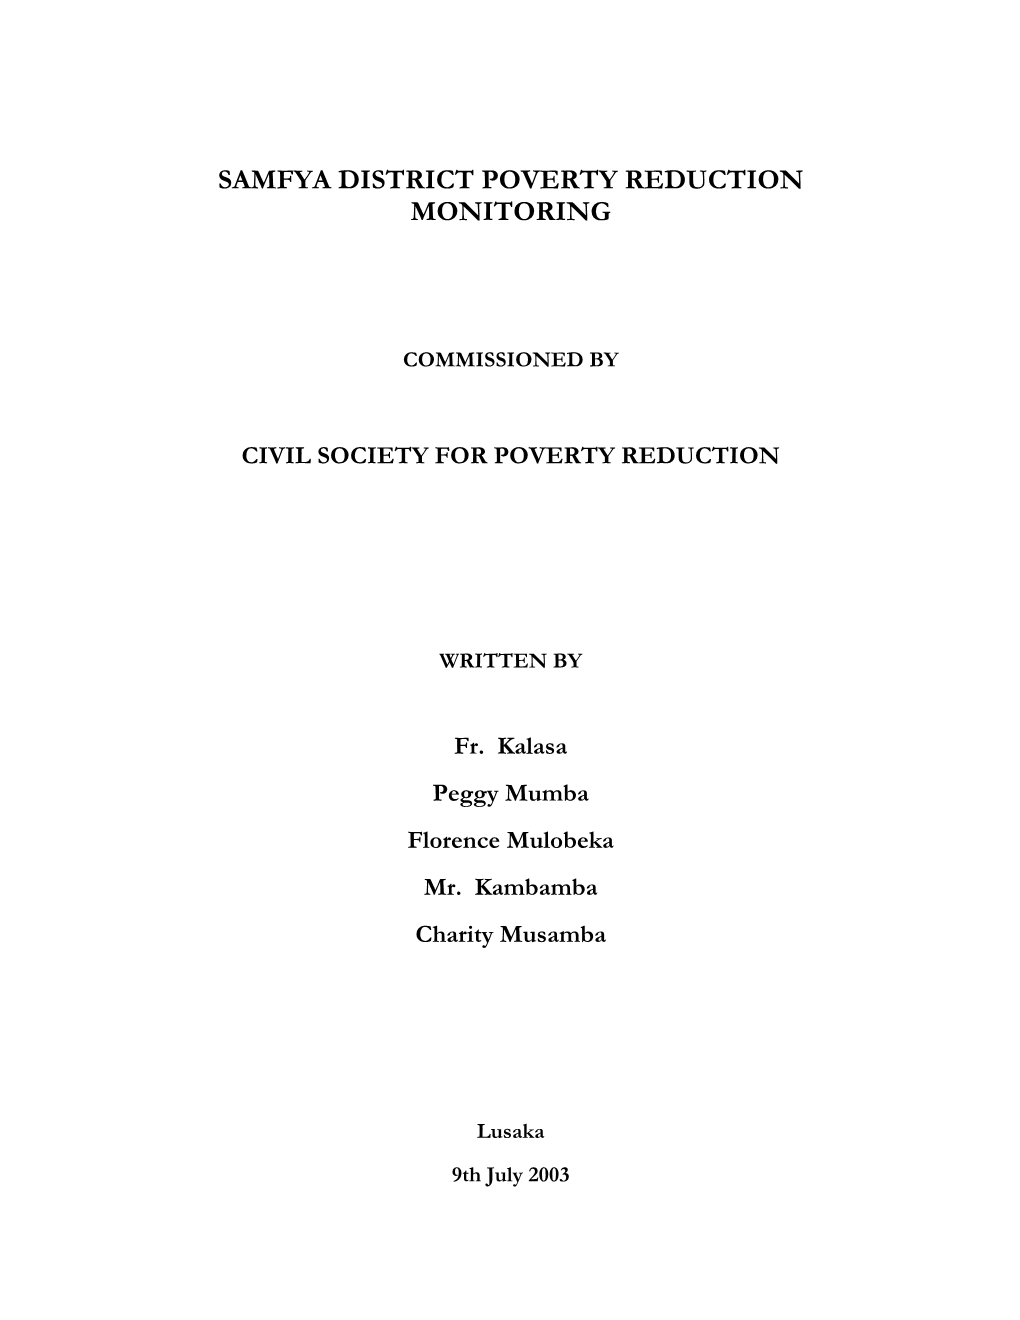 Samfya District Poverty Reduction Monitoring